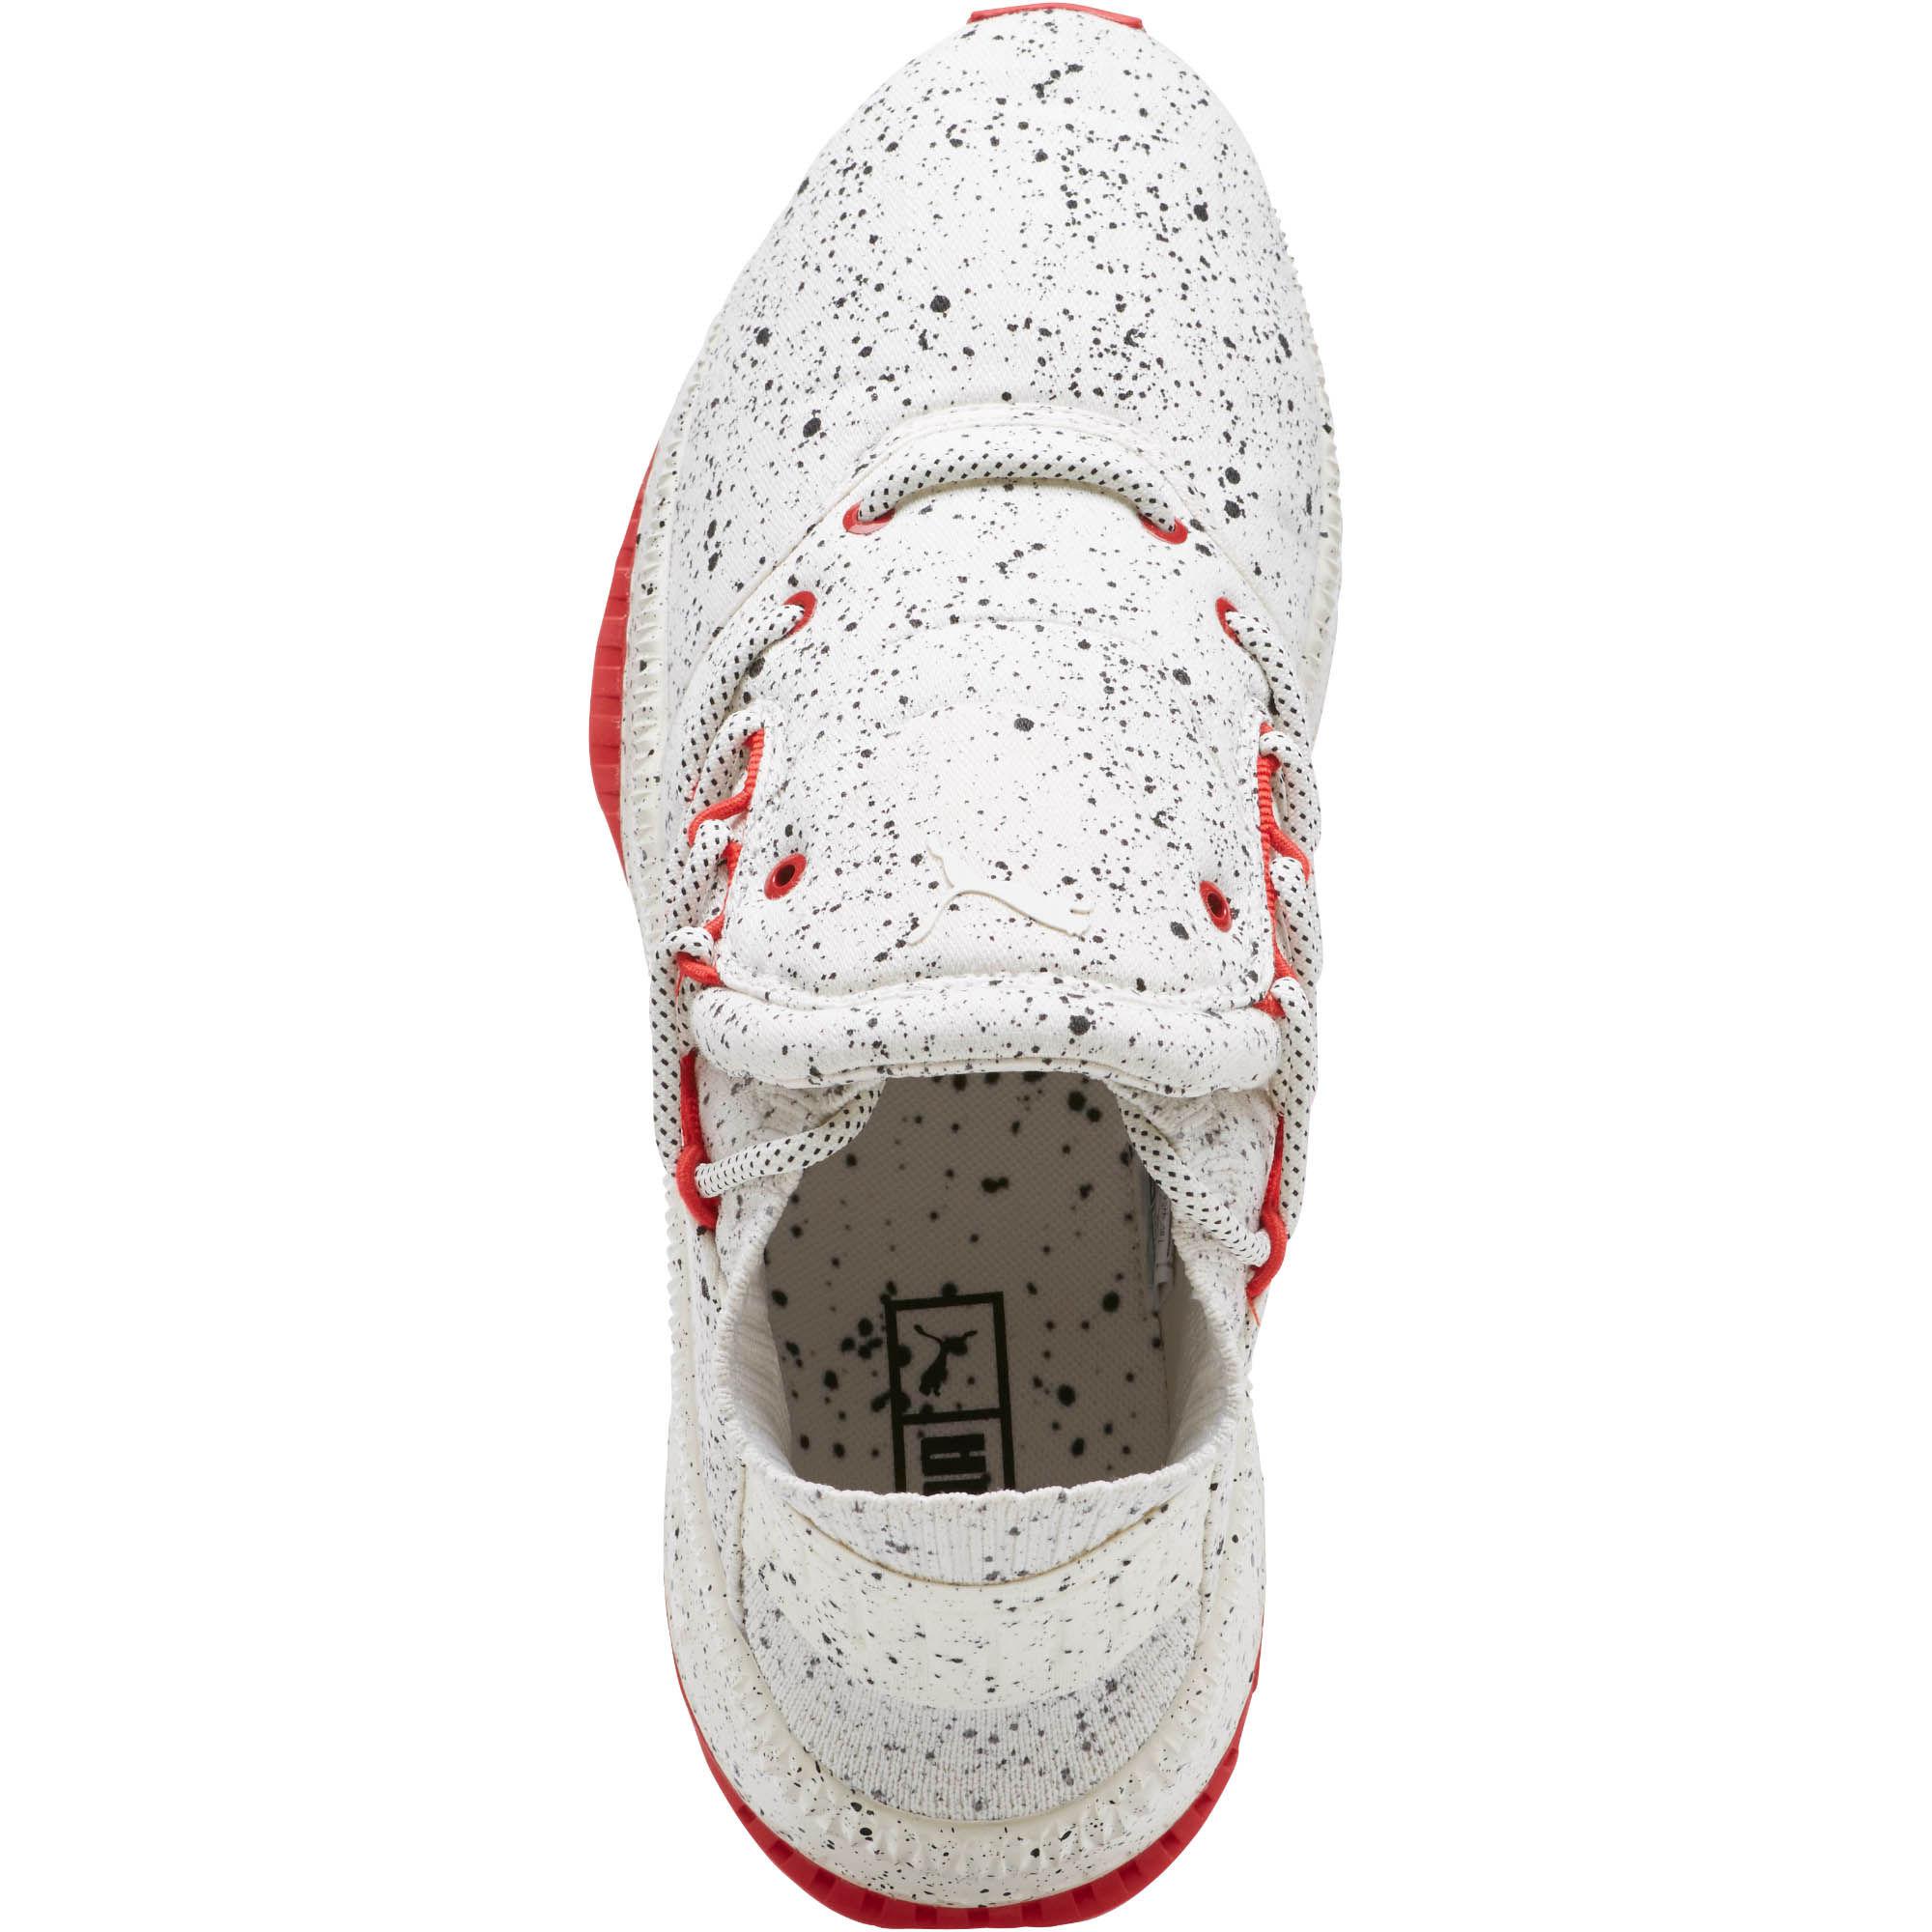 PUMA Tsugi Shinsei K Sneakers in White-Black-Red (White) - Lyst